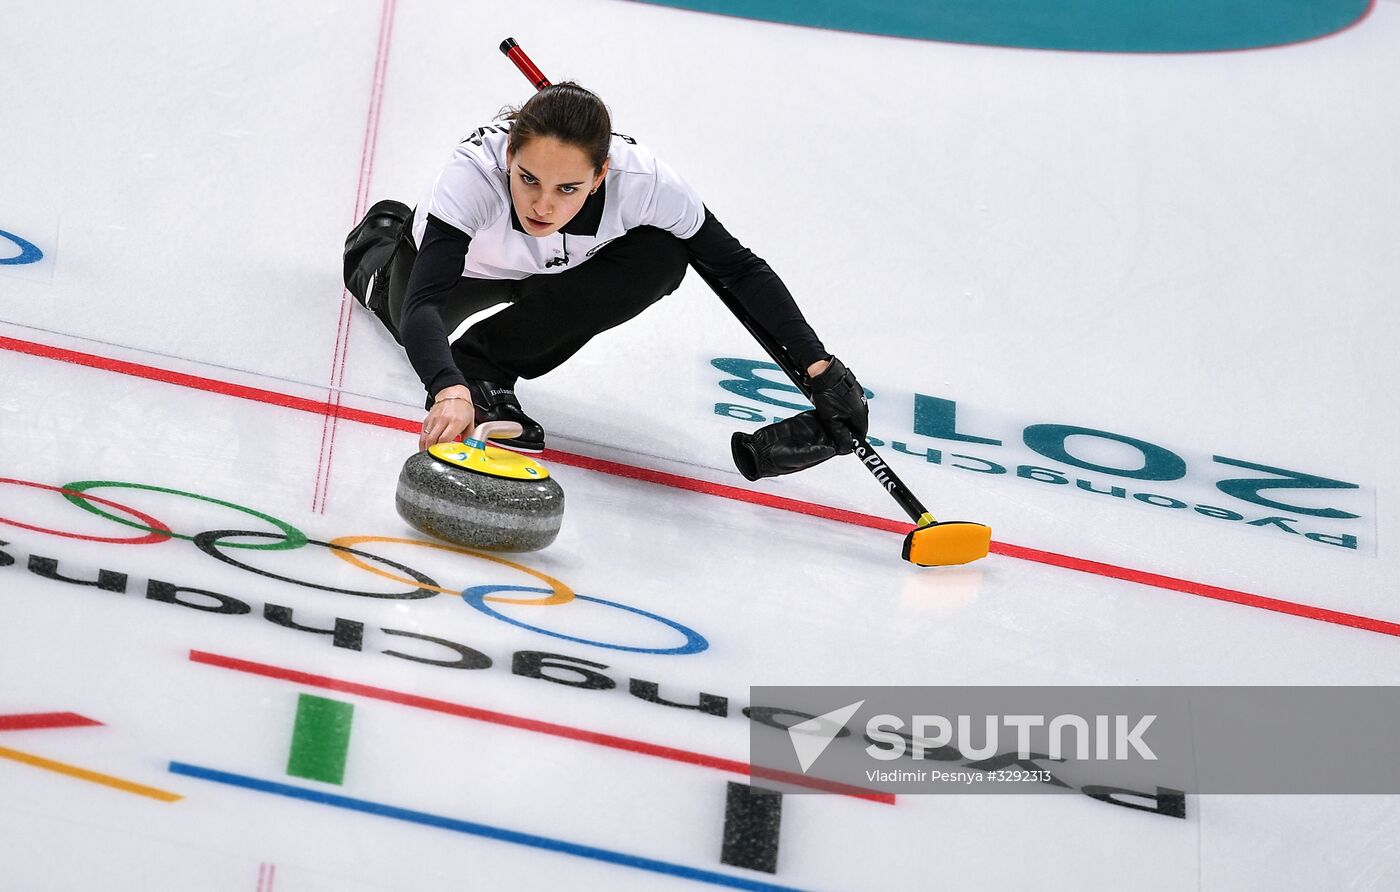 2018 Winter Olympics. Curling. Mixed doubles. Republic of Korea vs. OAR